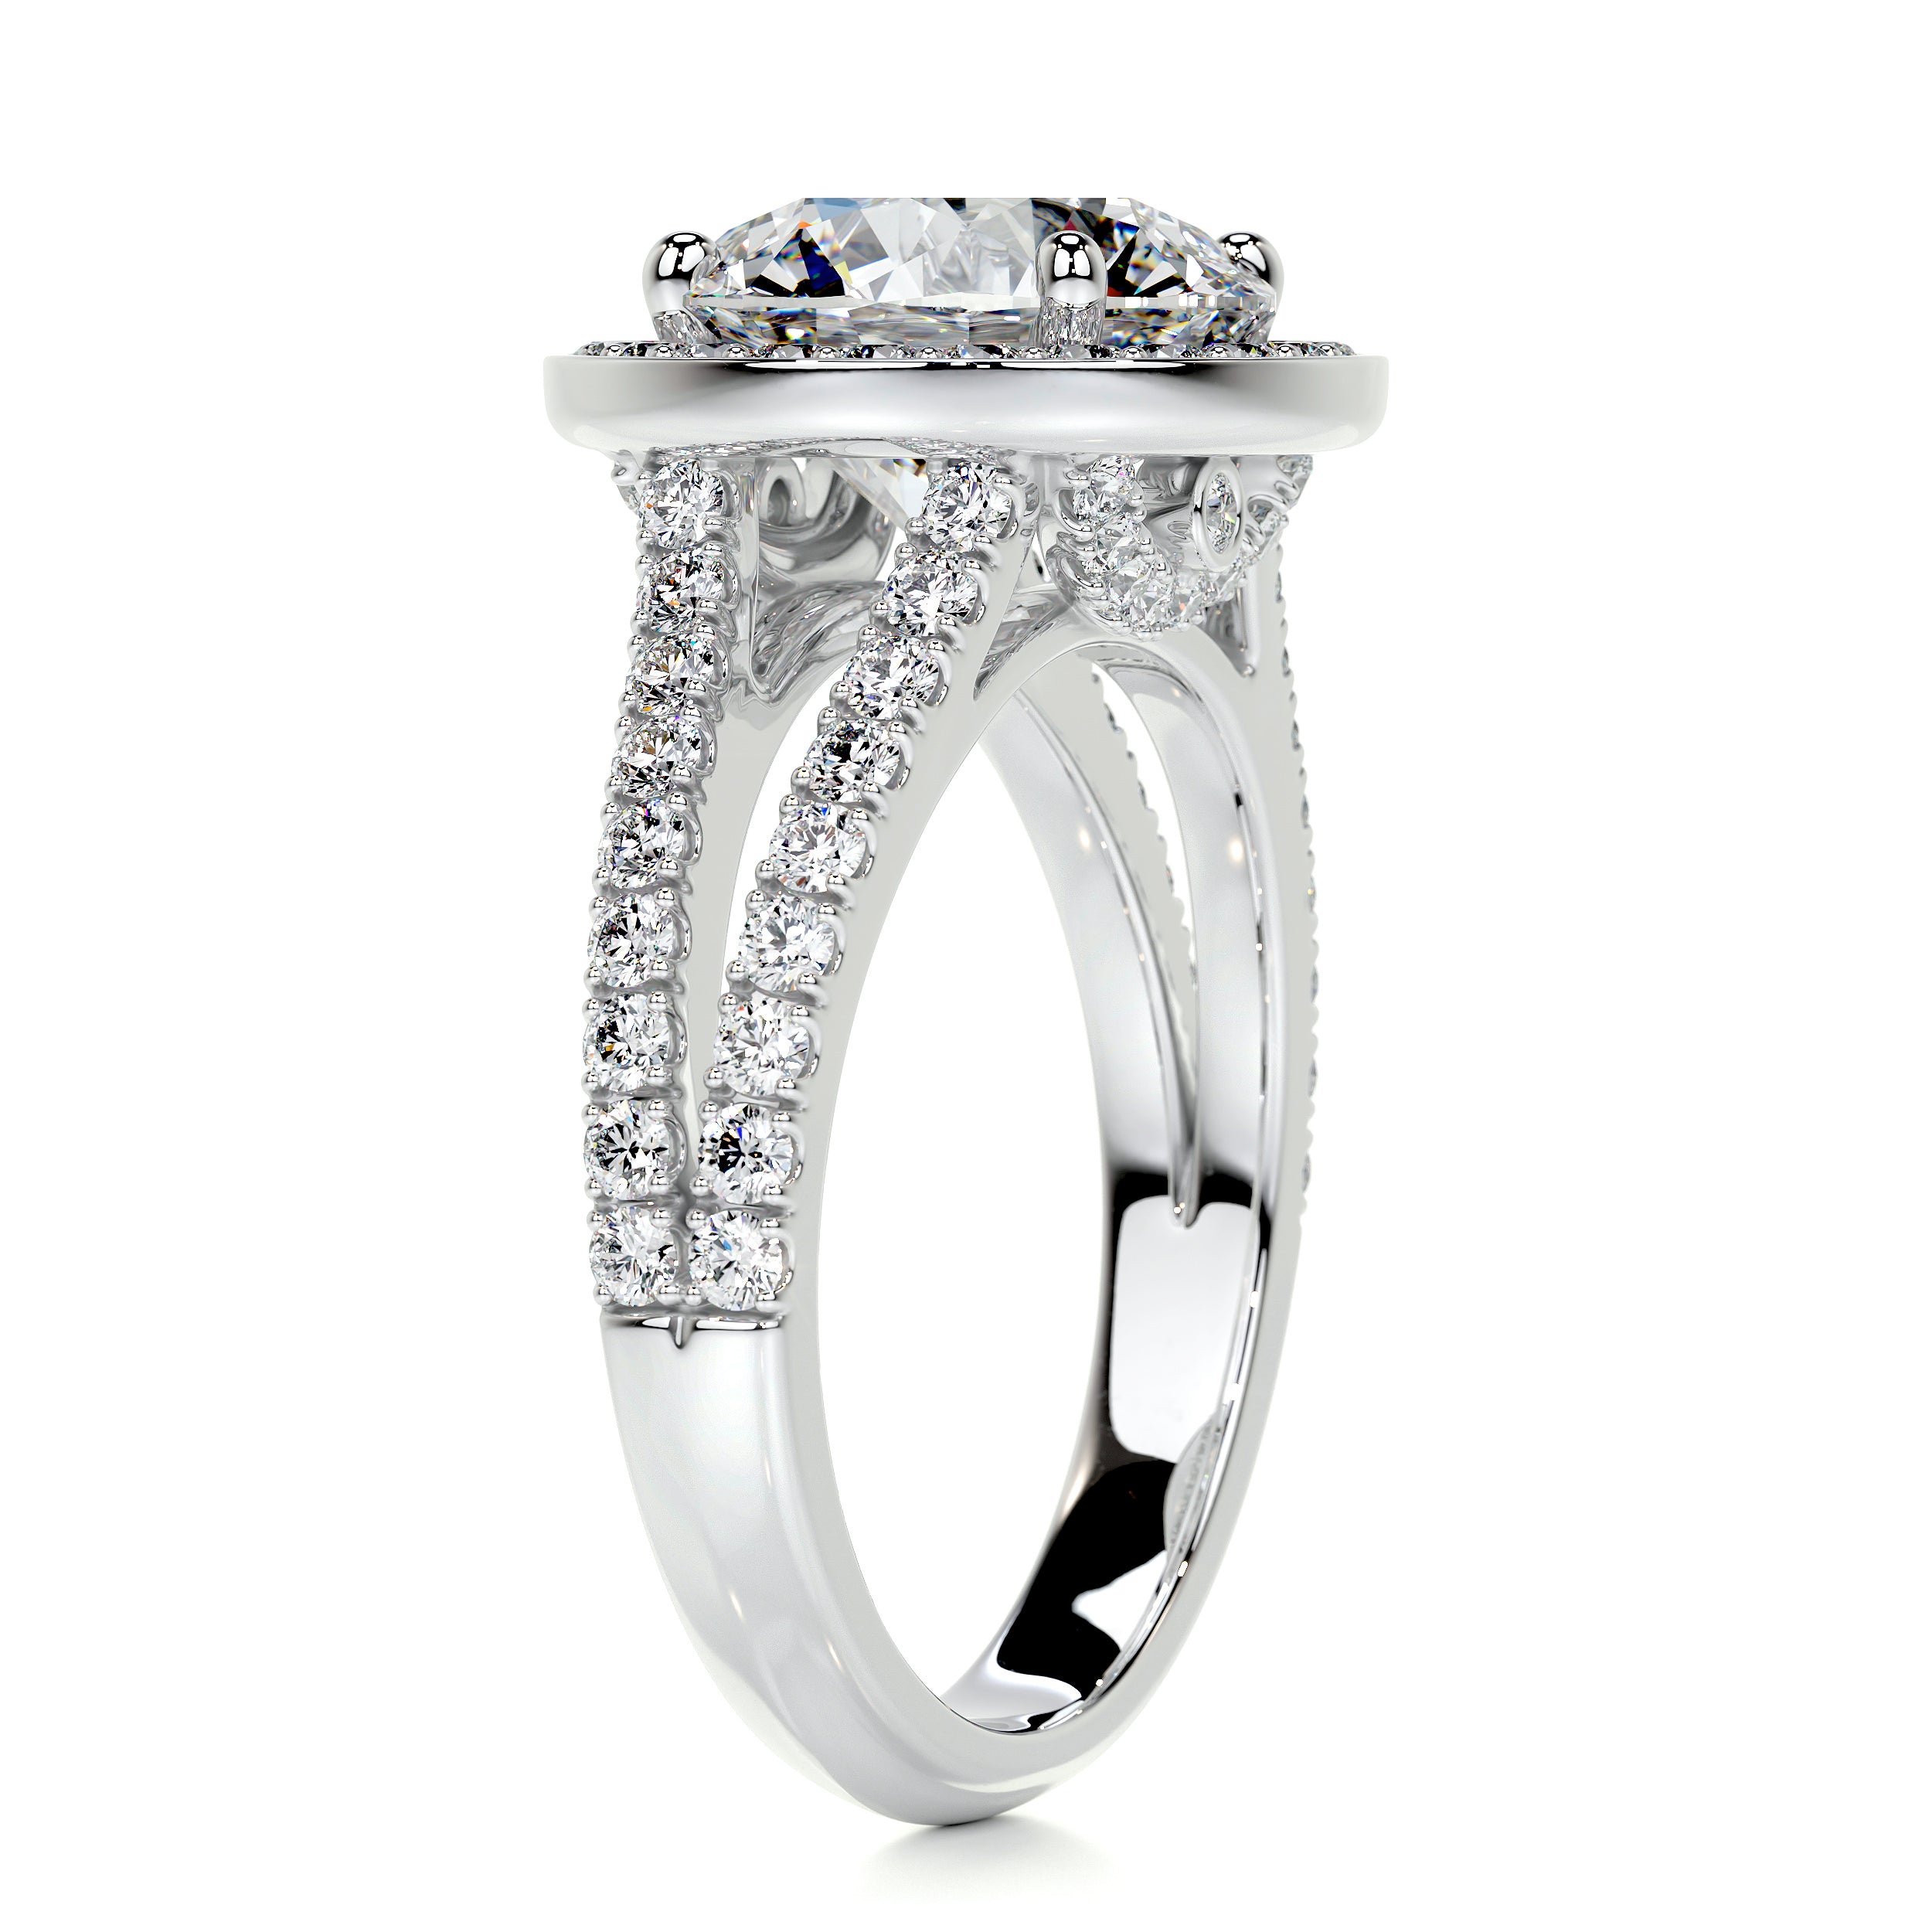 Camilla Diamond Engagement Ring   (2.75 Carat) -14K White Gold